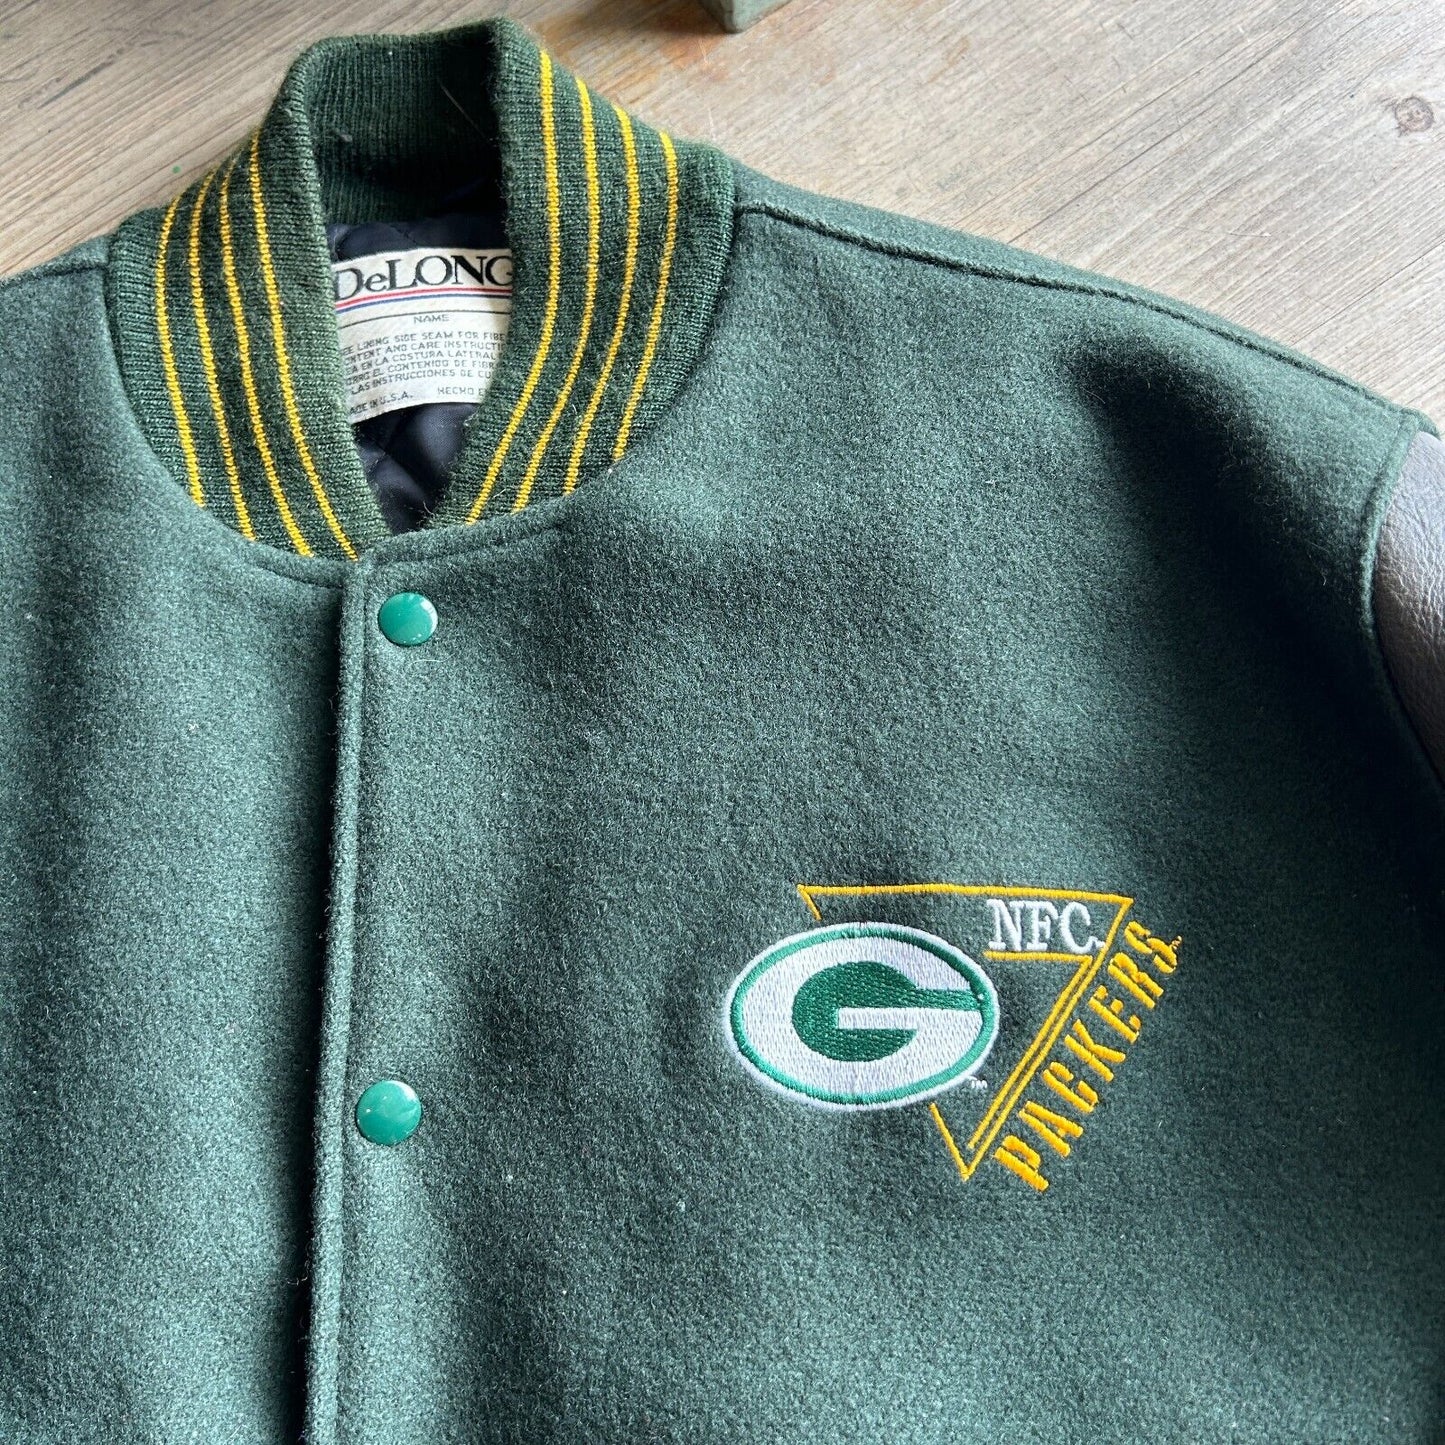 VINTAGE 90s | Green Bay Packers DeLong Varsity Football Jacket sz L Adult